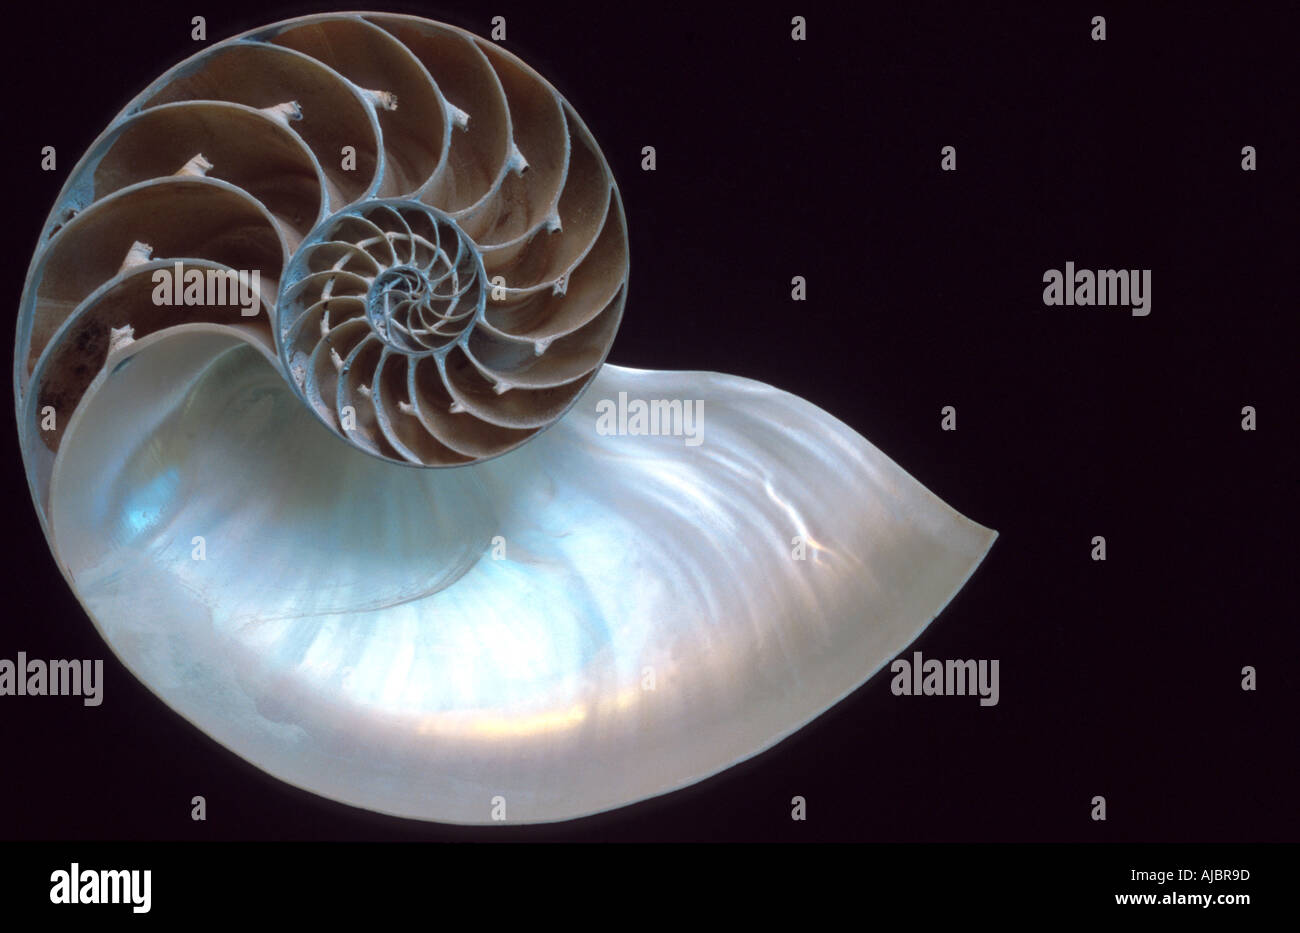 chambered nautilus, emperor nautilus (Nautilus pompilius), opened spiral shell Stock Photo